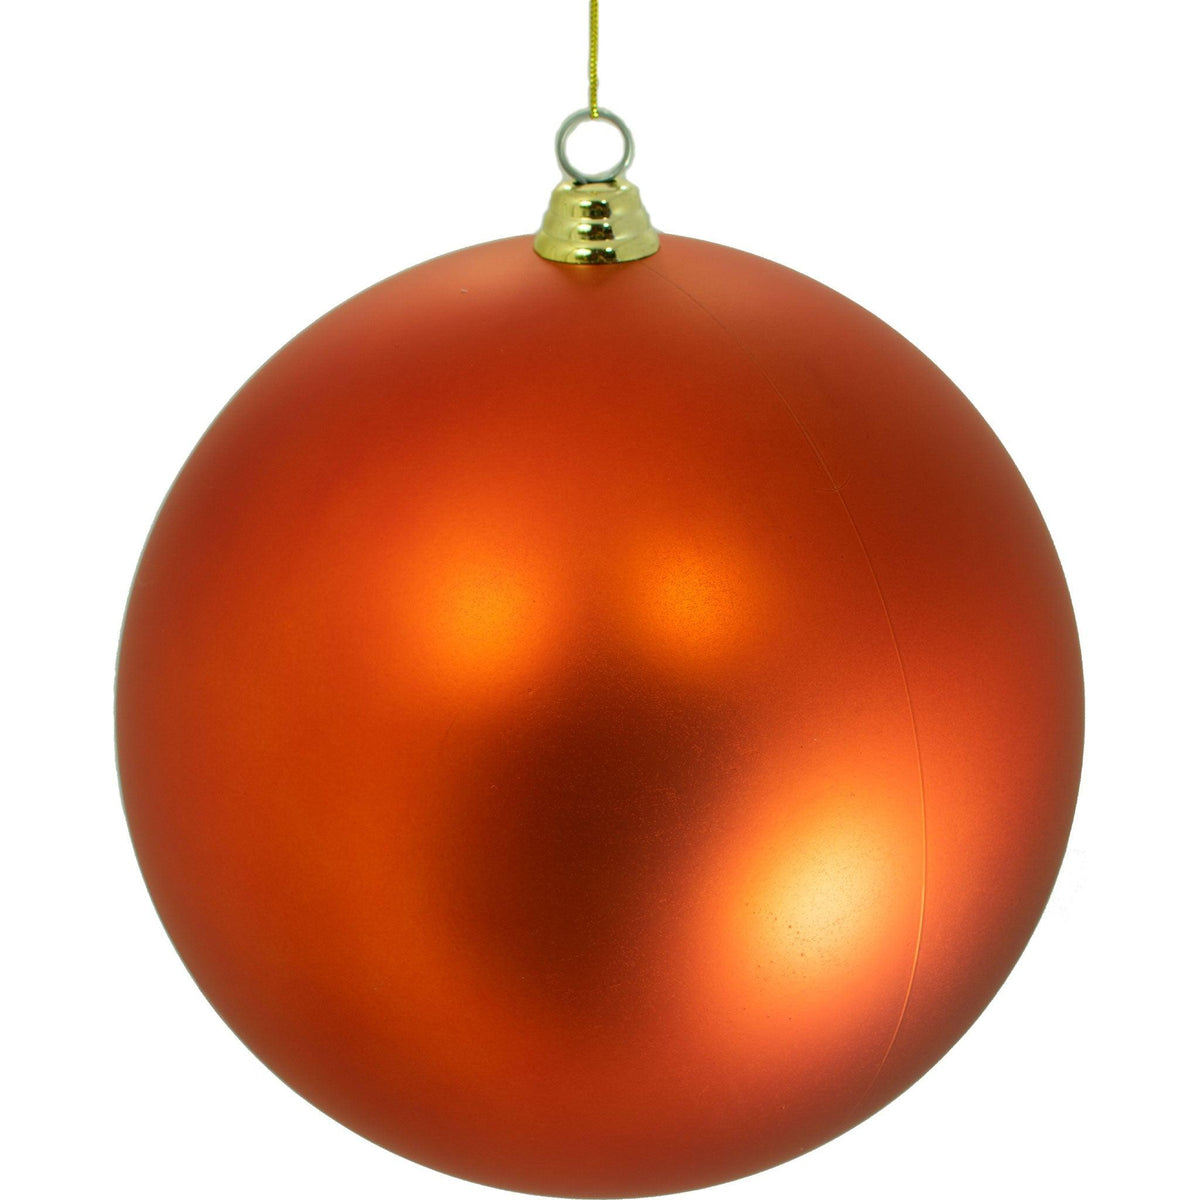 Hanging Ball Ornaments sold in Matte Orange color